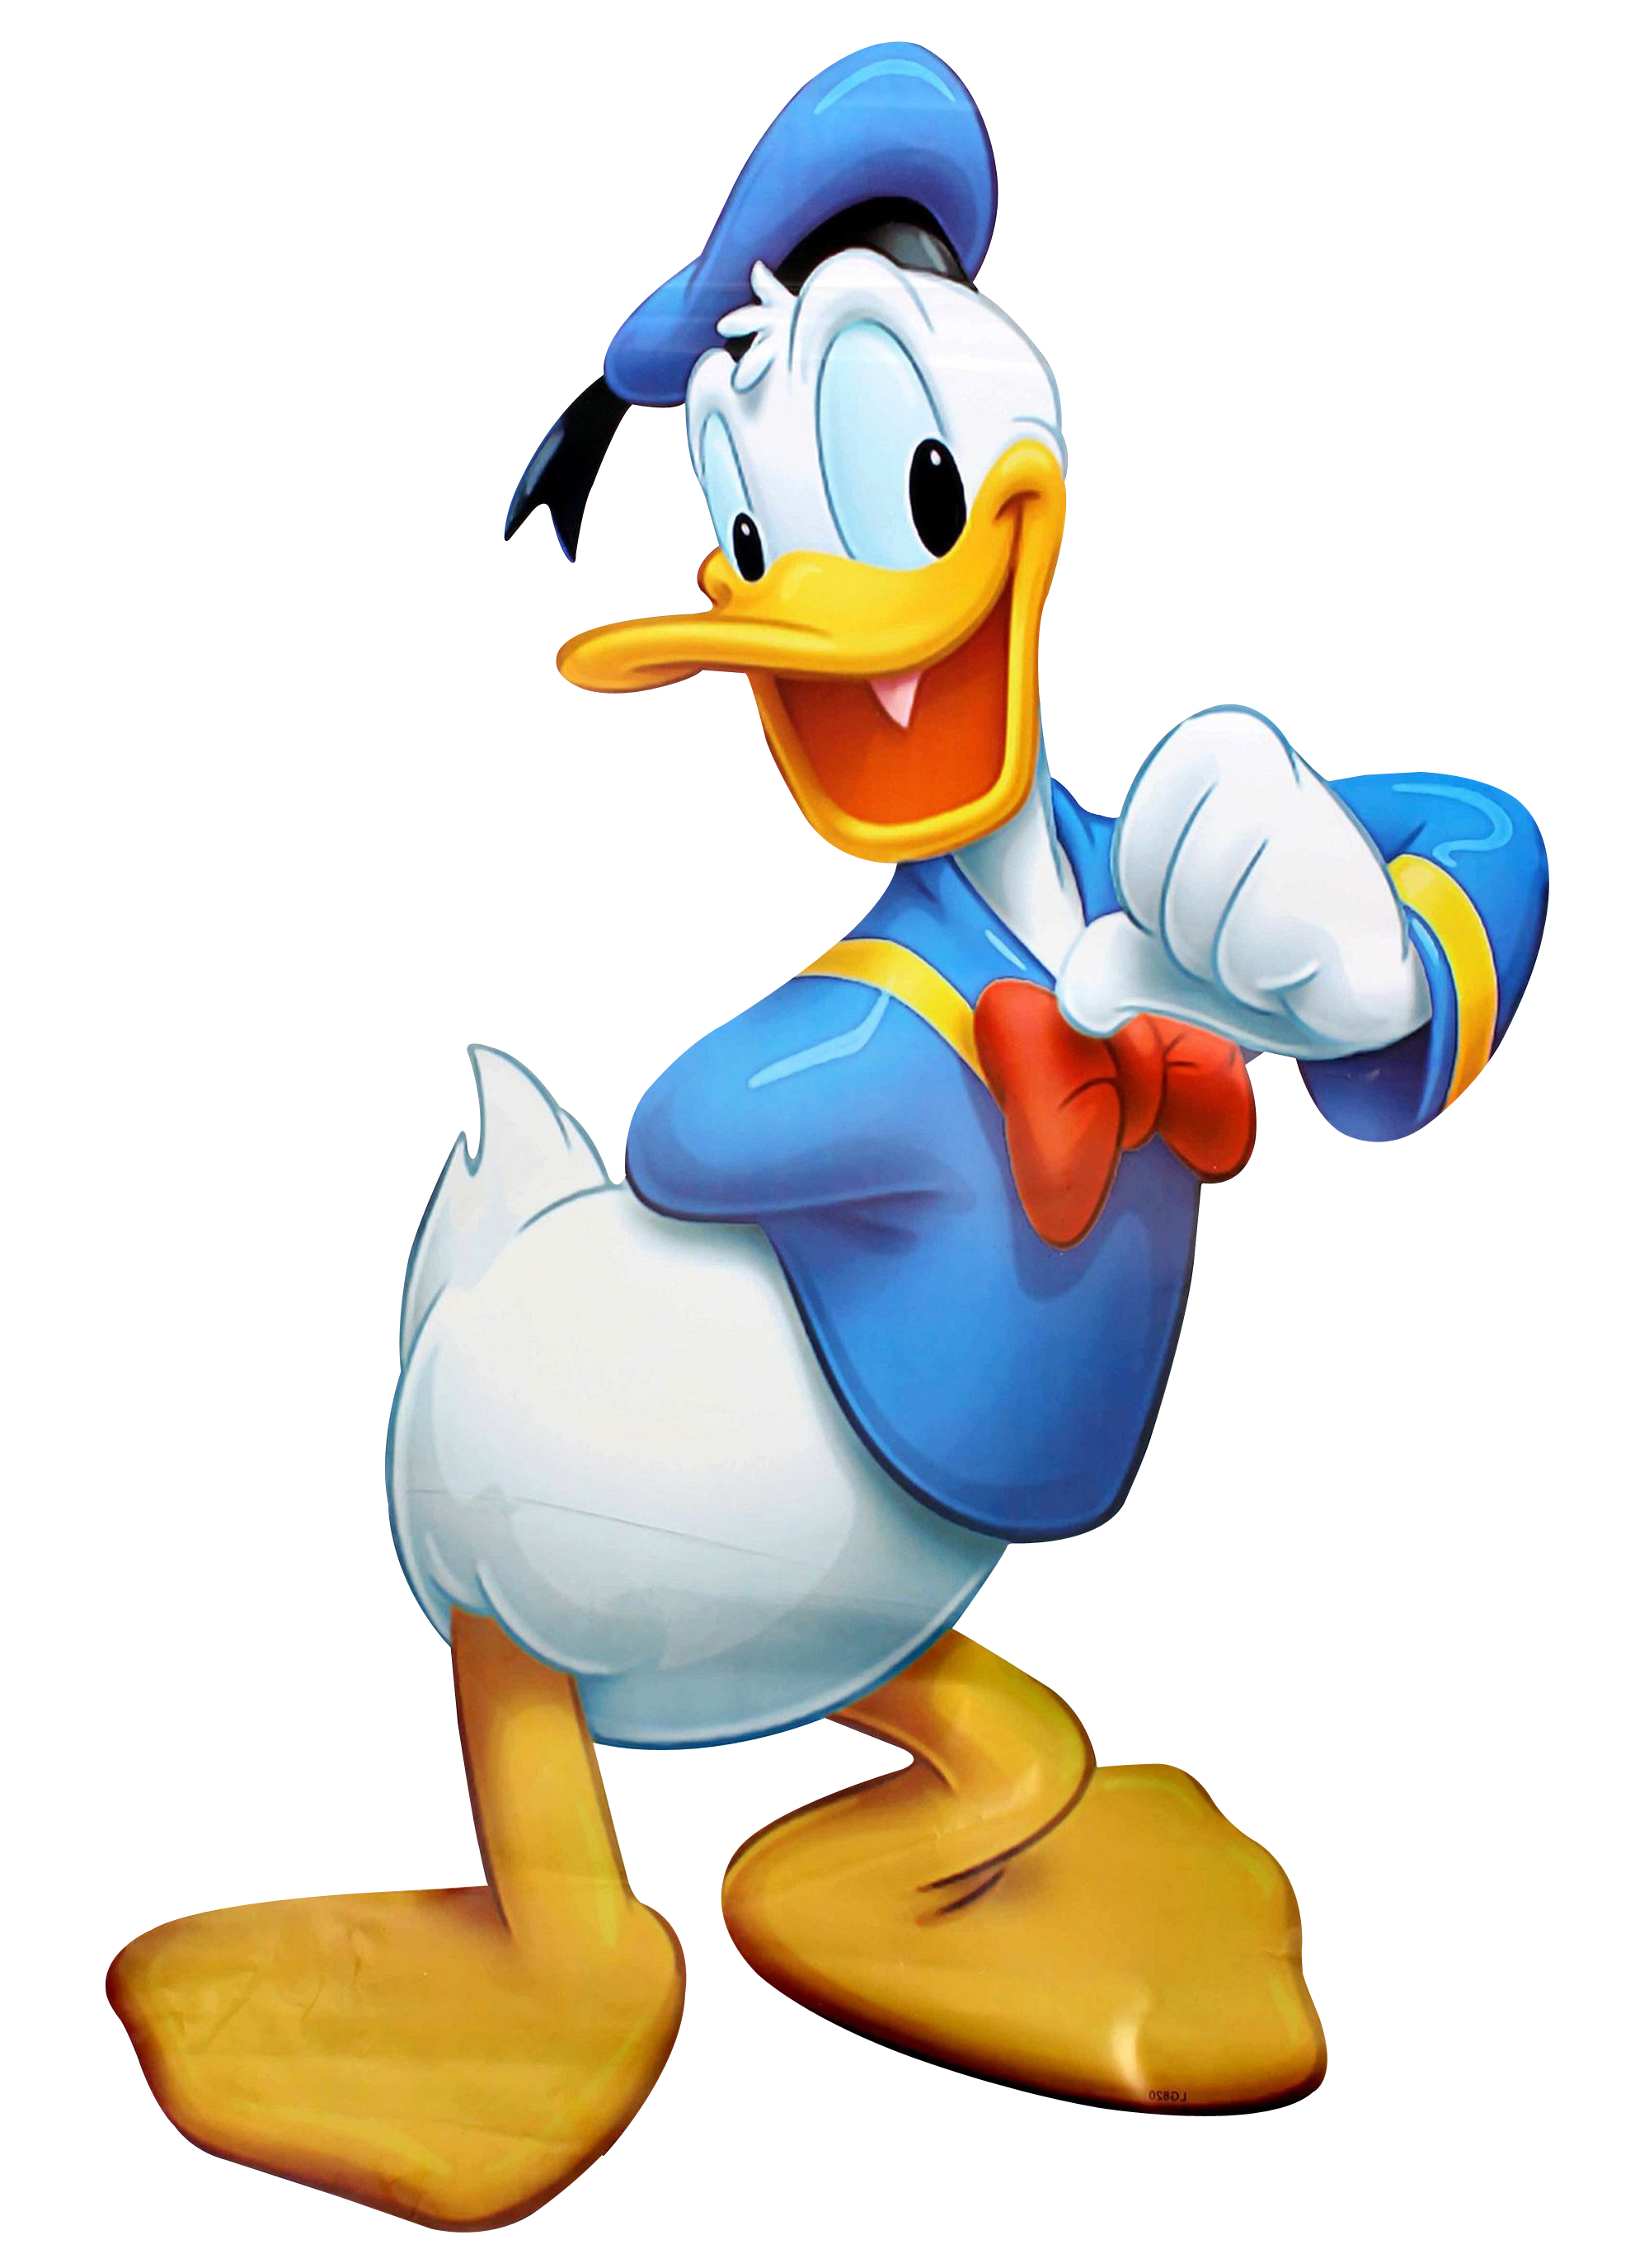 Donald Duck Happy PNG Image - PurePNG | Free transparent CC0 PNG Image